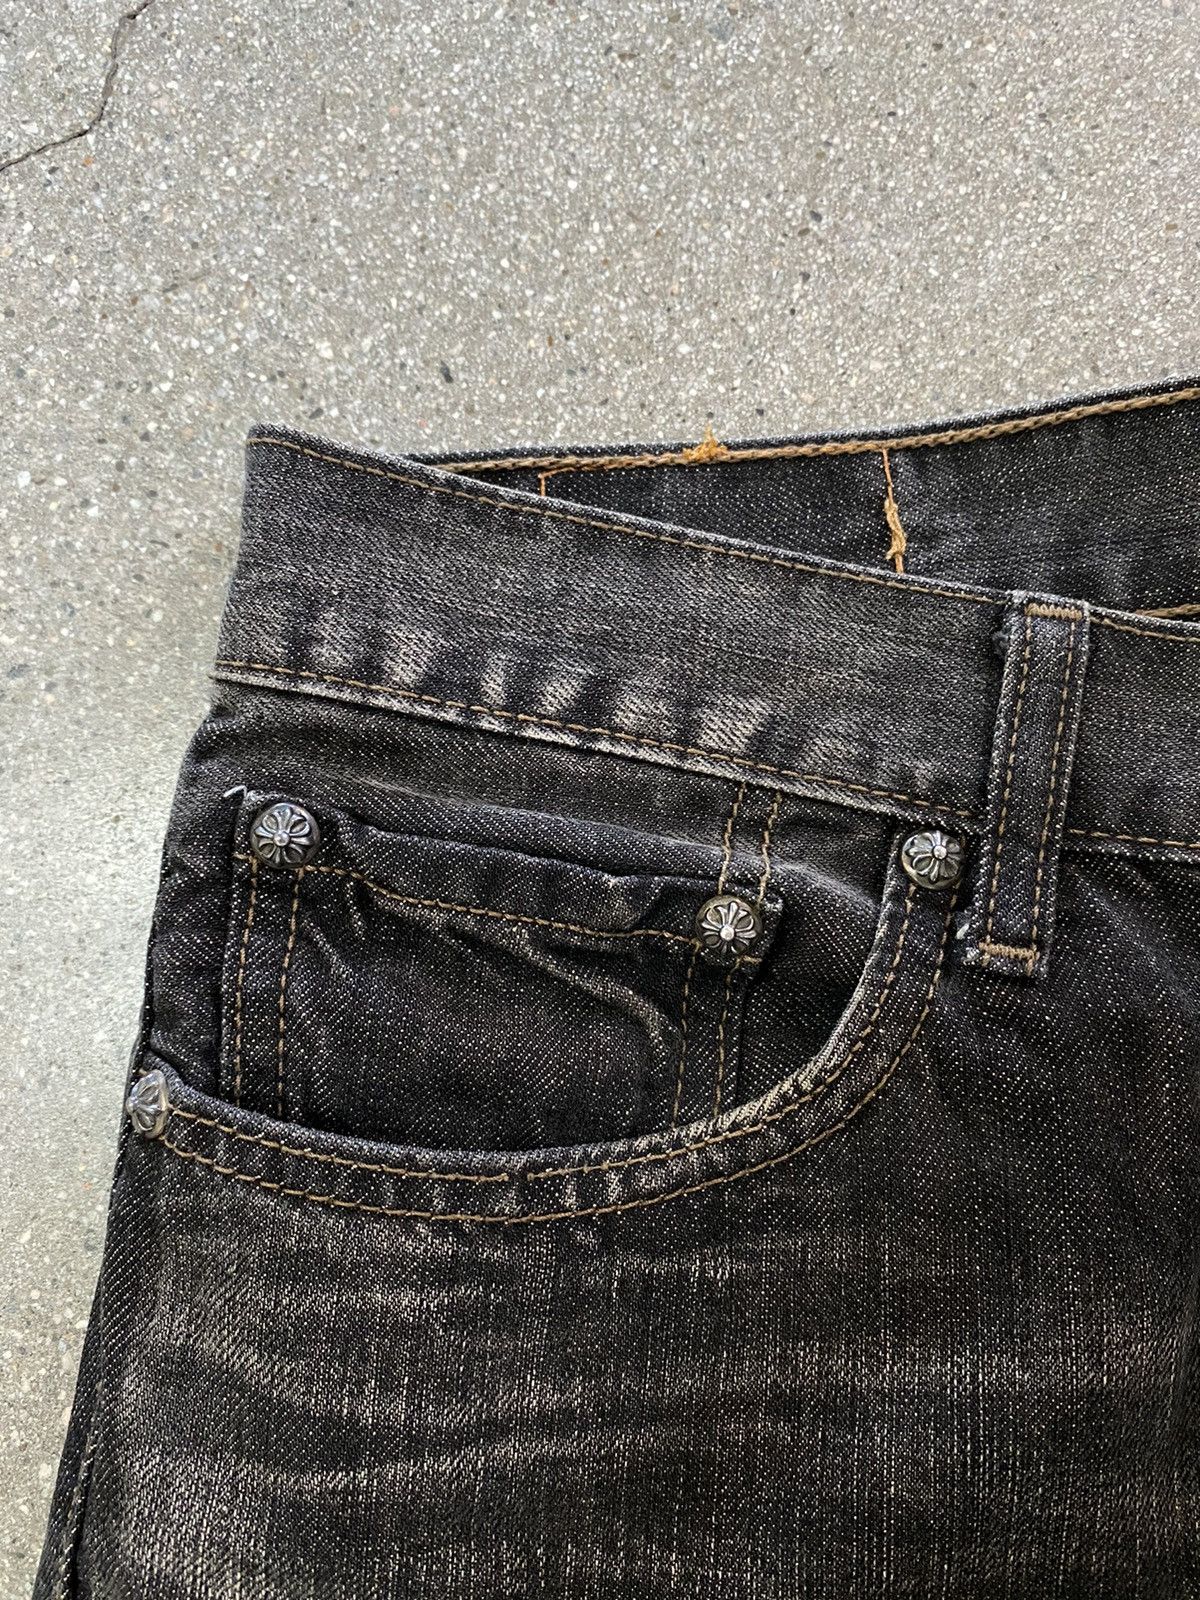 Chrome Hearts Cross Patch Denim Jeans (Special Order) Size US 30 / EU 46 - 8 Thumbnail